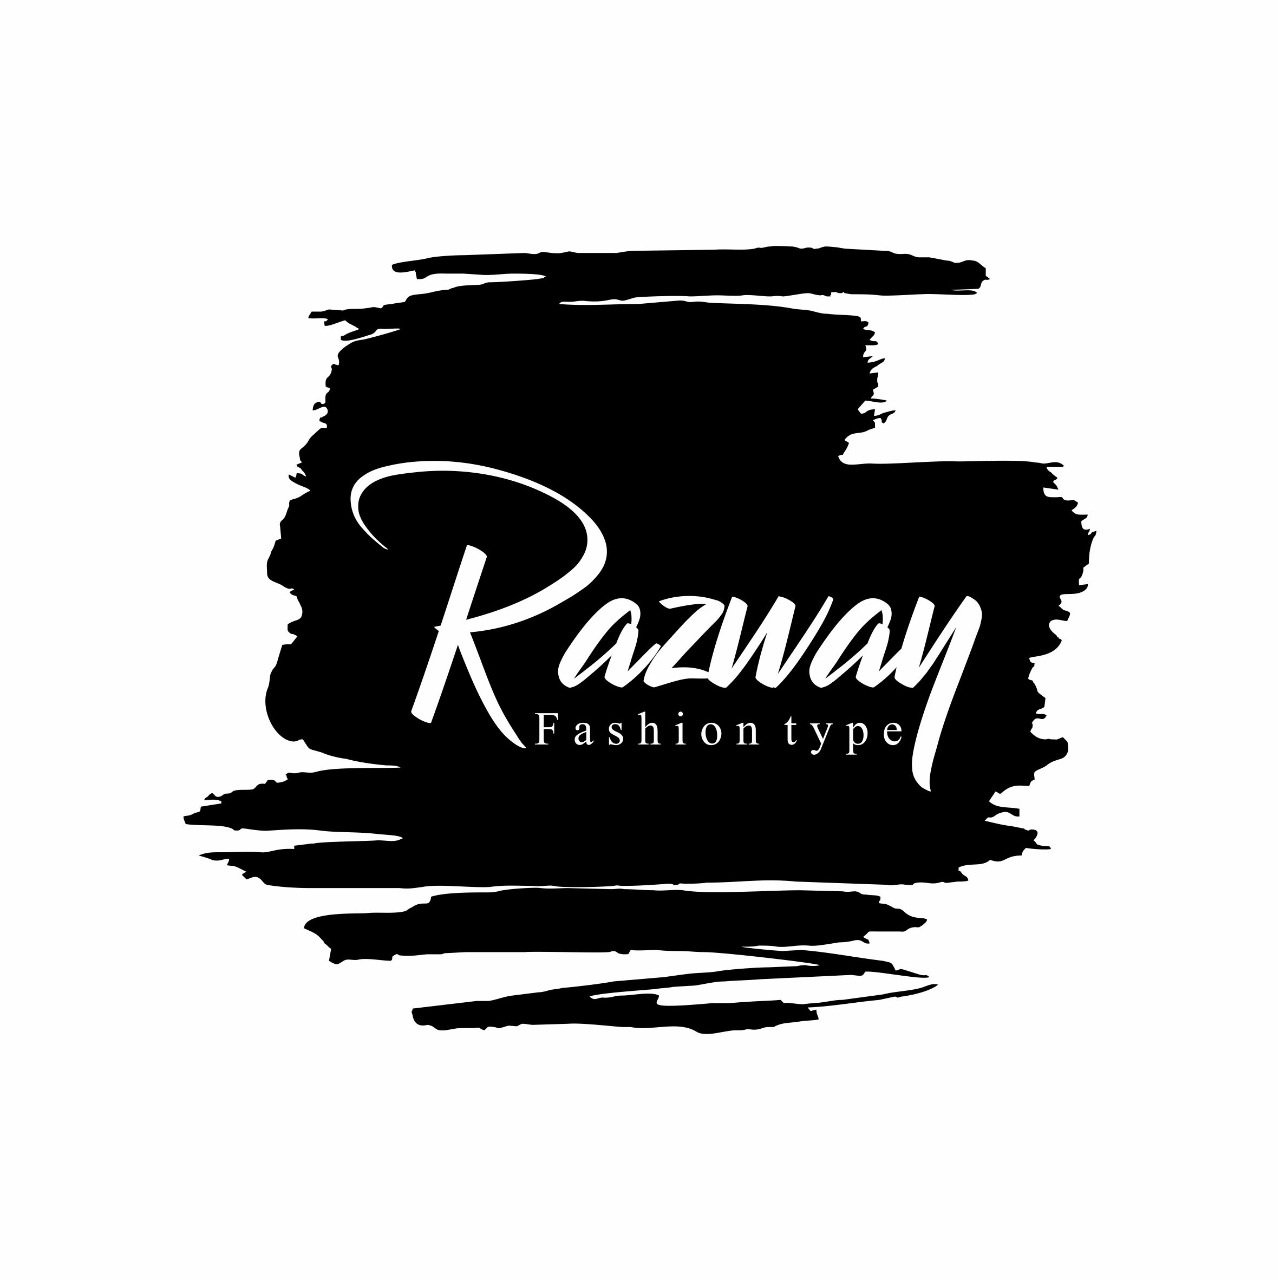 Razway